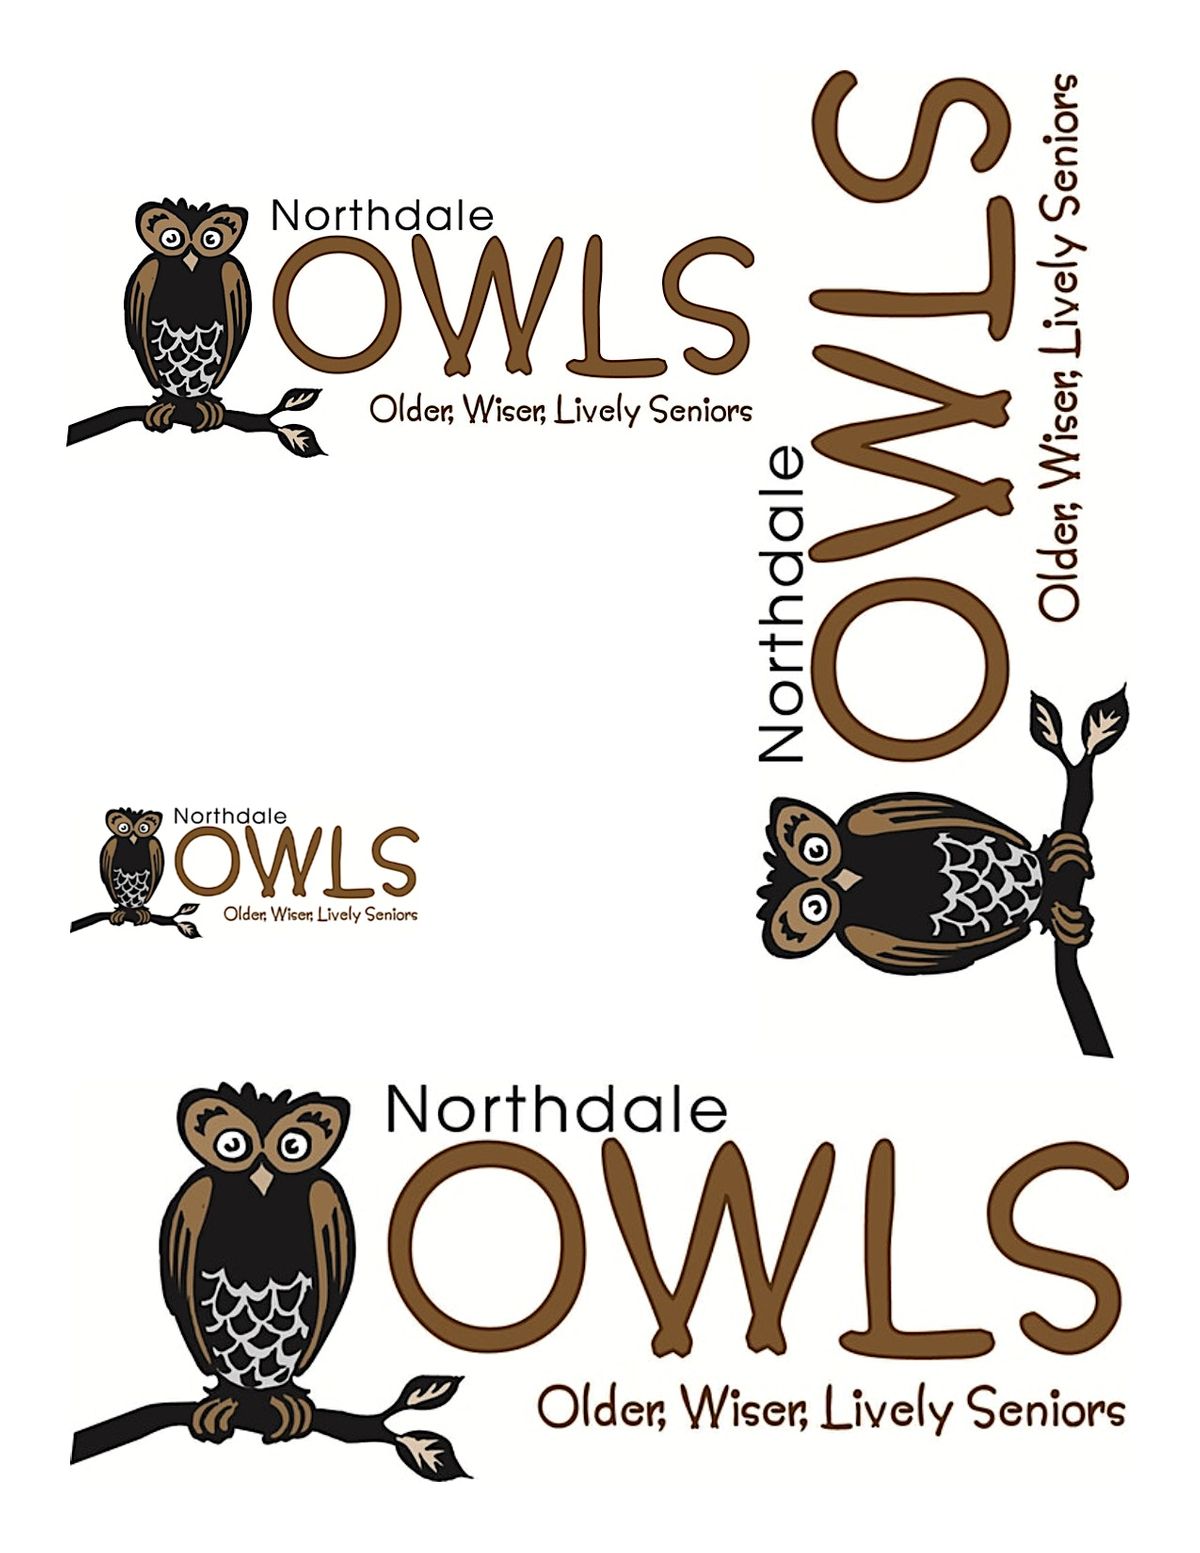 Northdale OWLS Sponsorship Table- February 7, 2023